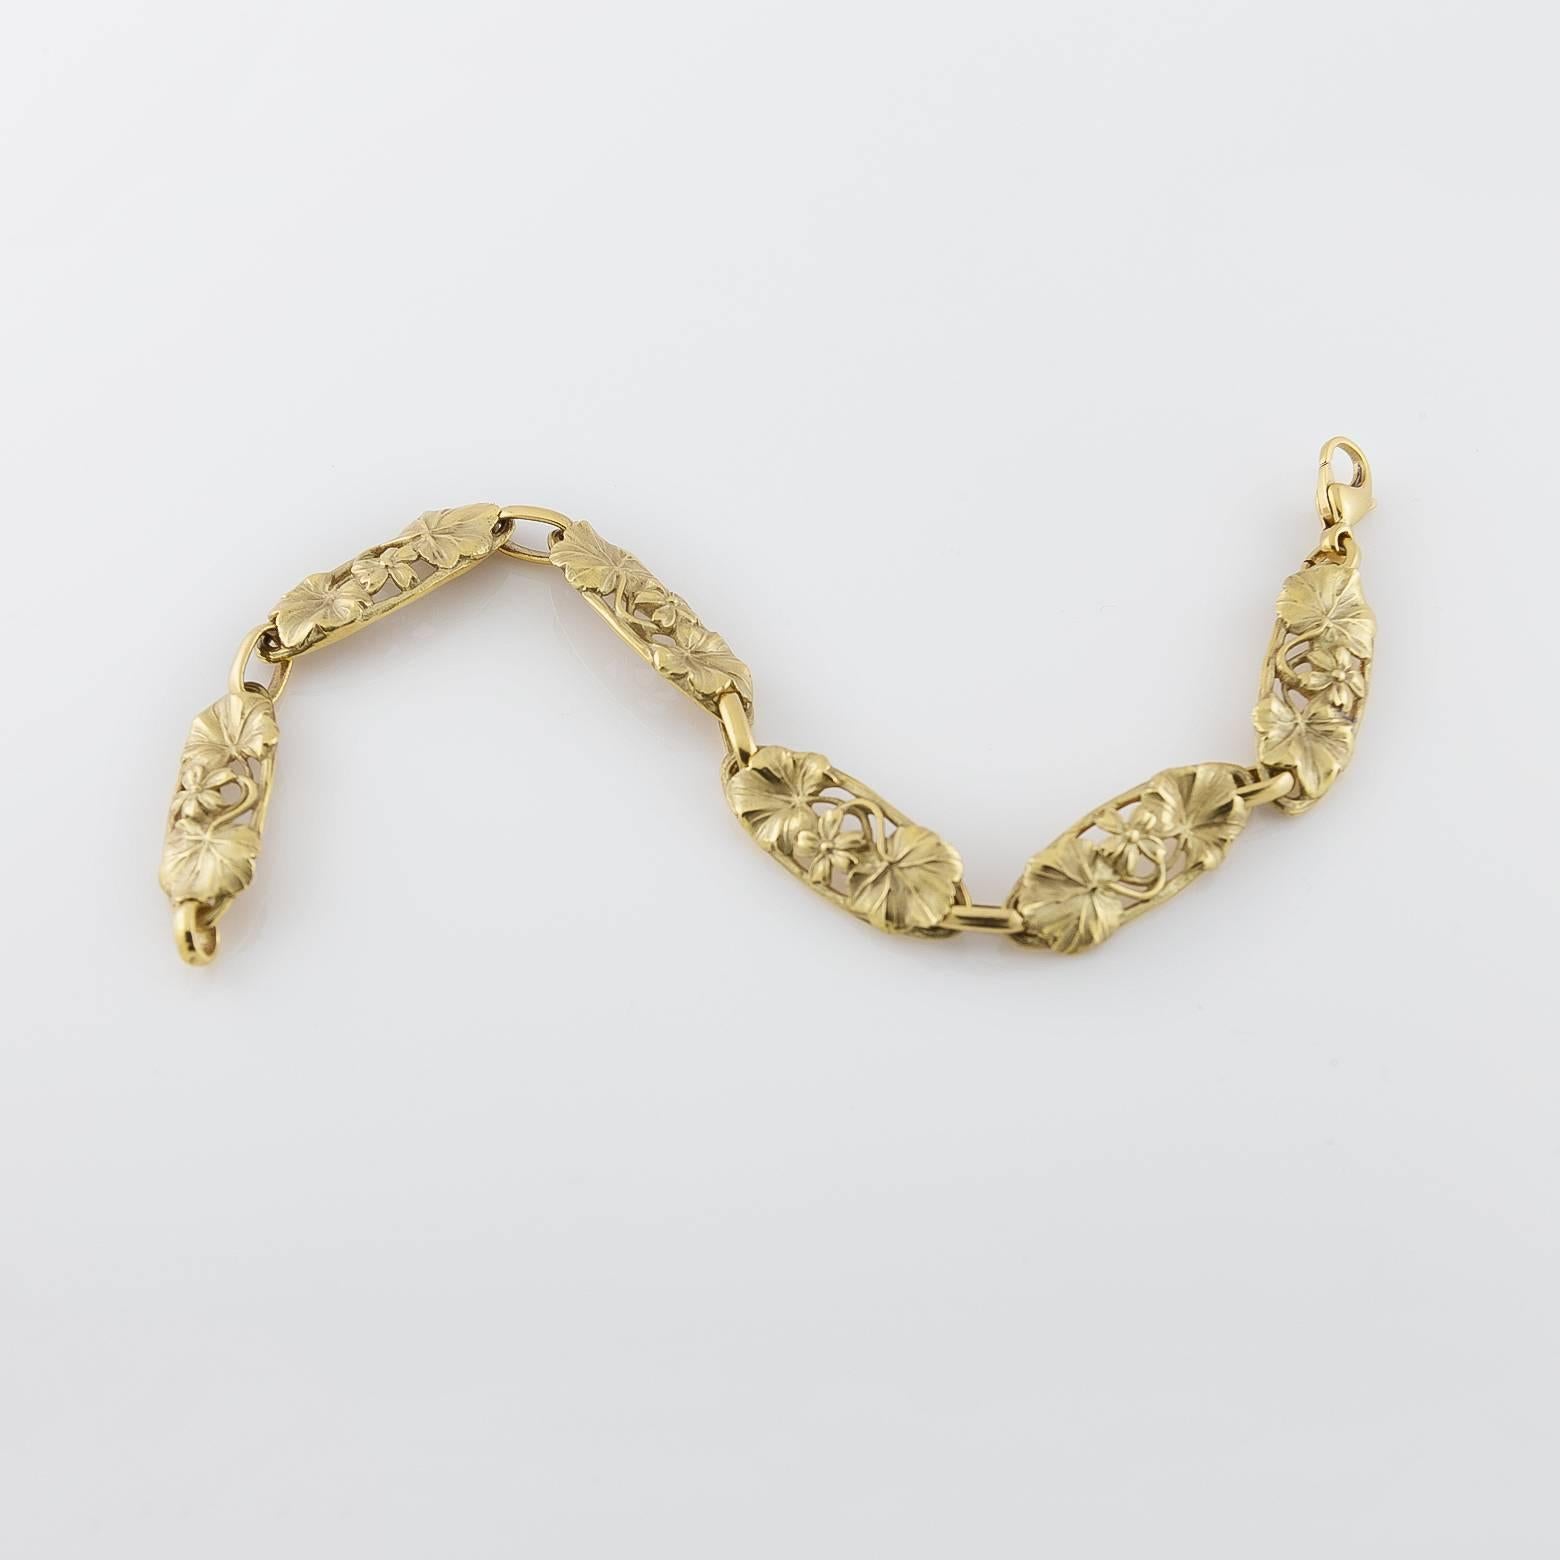 Arnould Art Nouveau 18K Gold Link Bracelet Re-Edition with Flowers and Vines 1